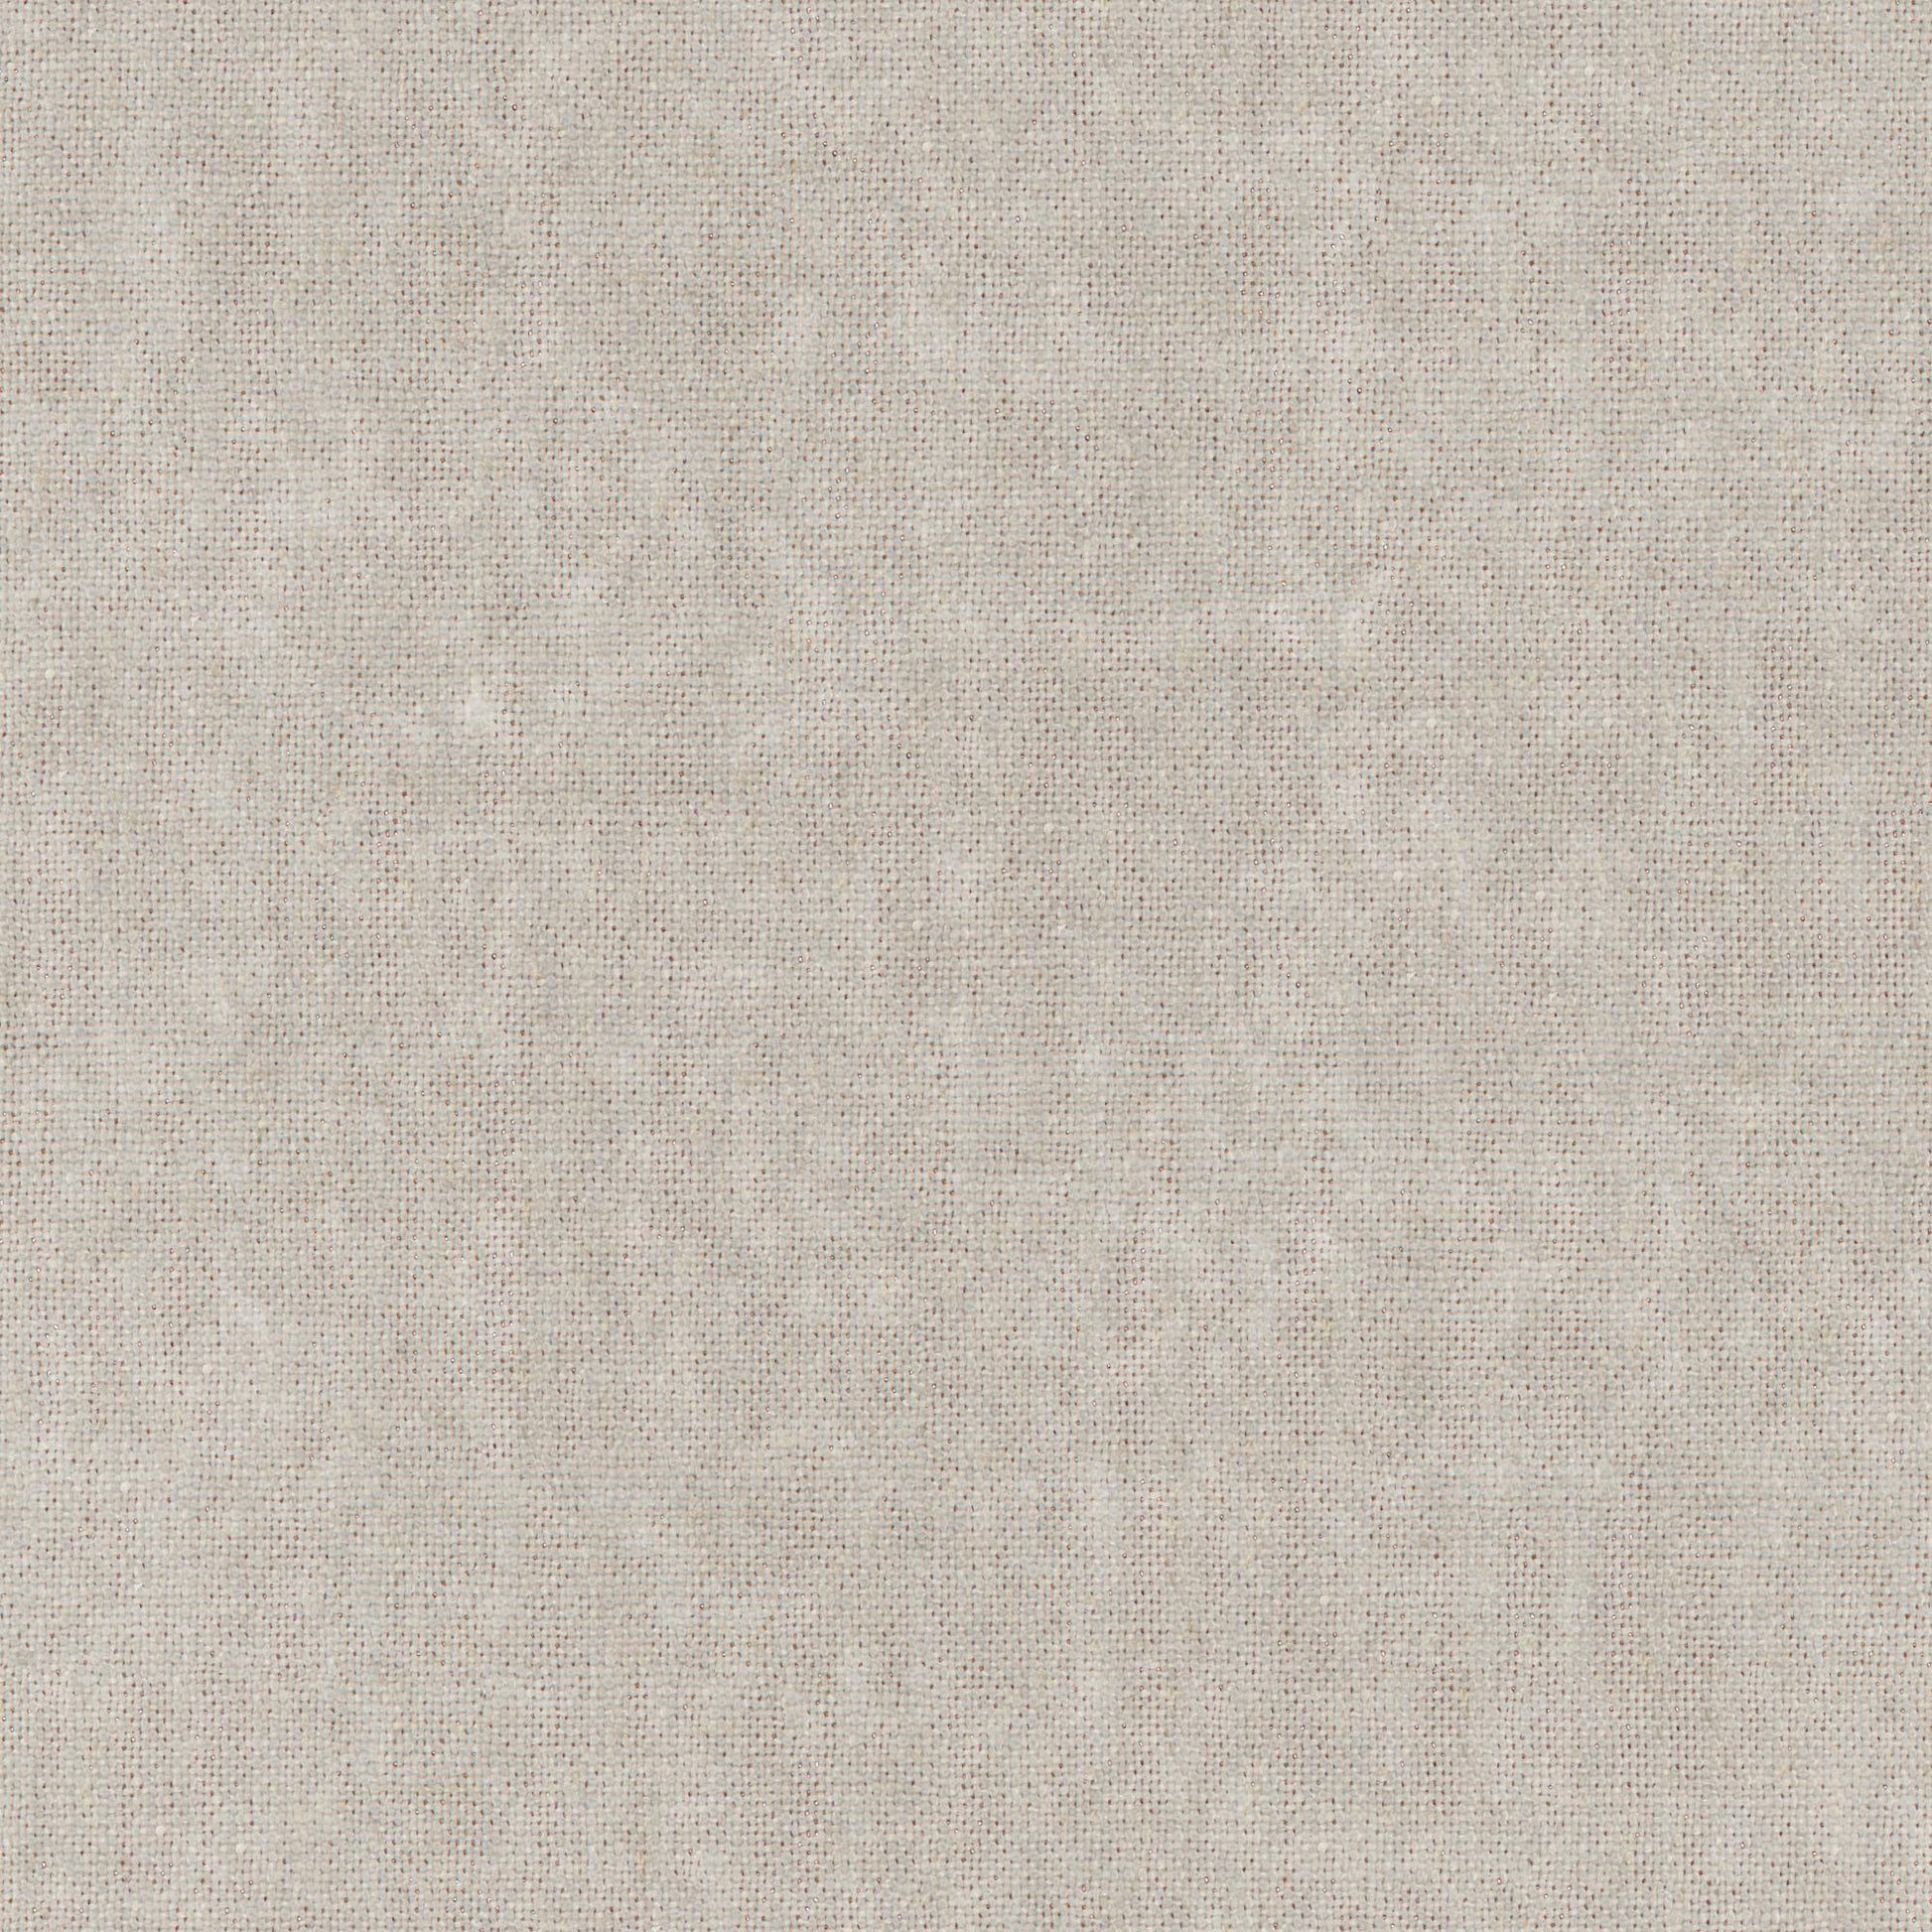 Home Fabrics - FibreGuard - Monterey - 04-Paloma - Fabric per Meter